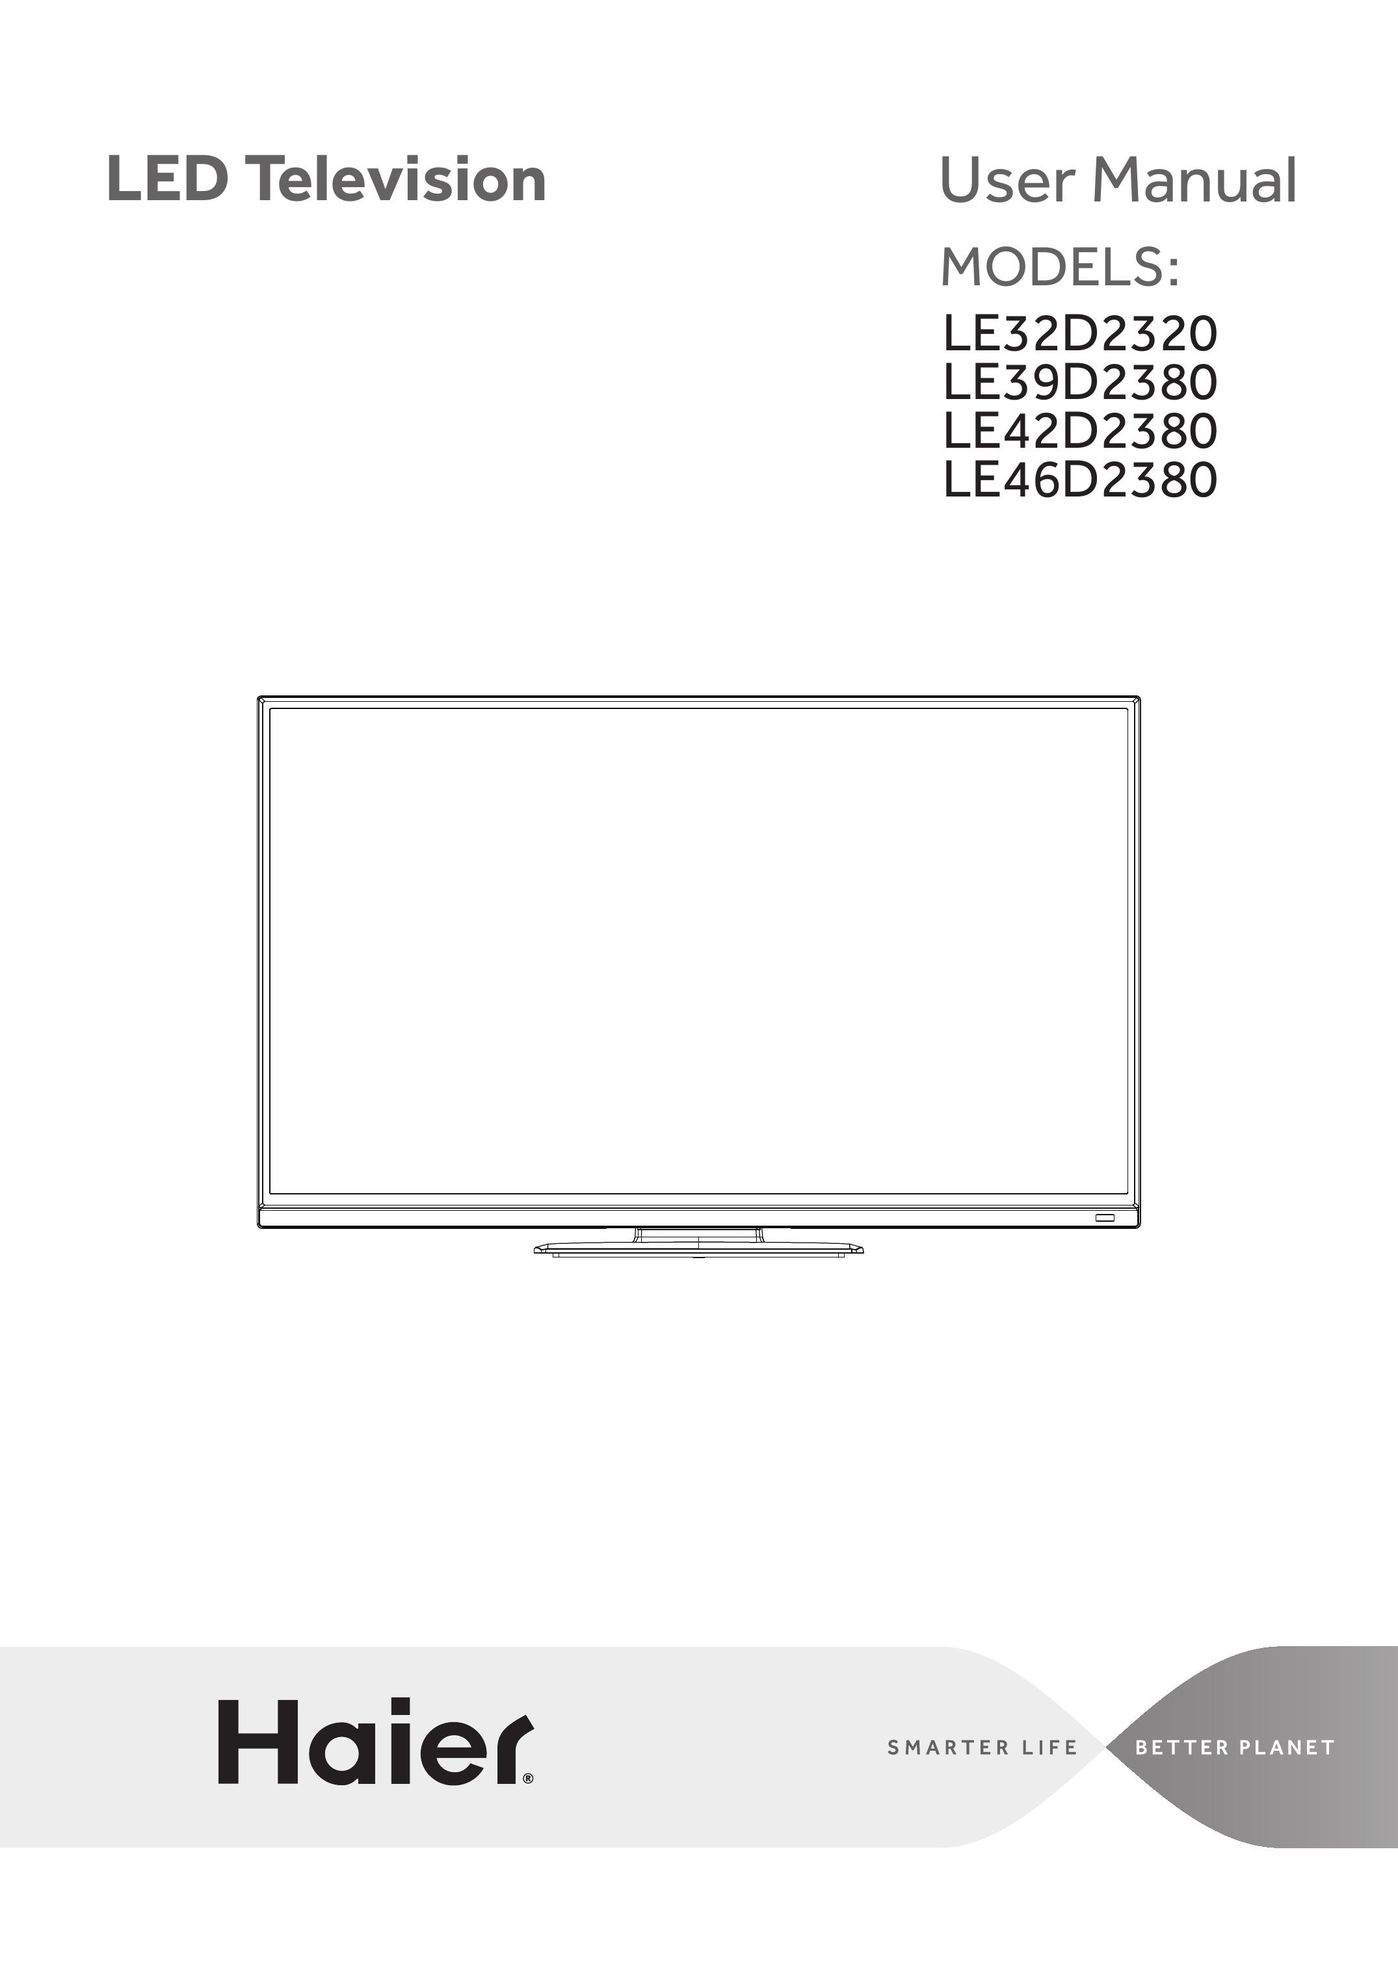 Haier LE39D2380 Car Satellite TV System User Manual